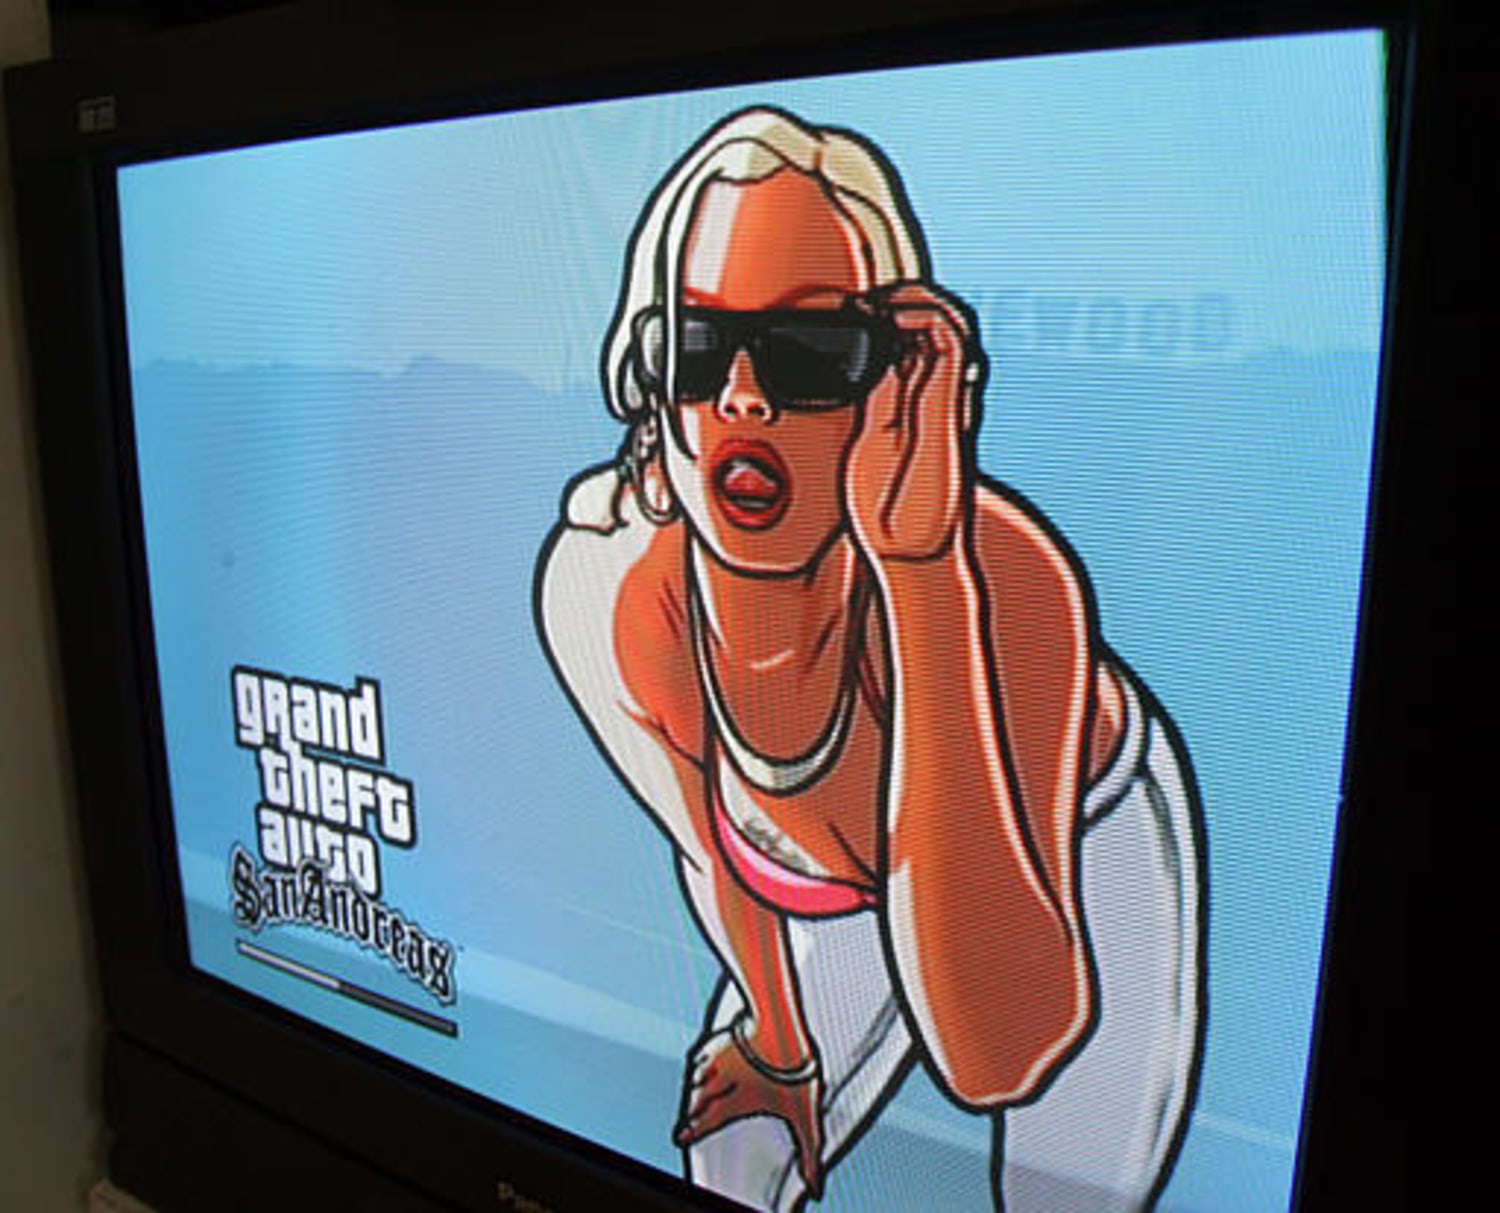 Grand Theft Auto GTA San Andreas Midia Digital [XBOX 360] - WR